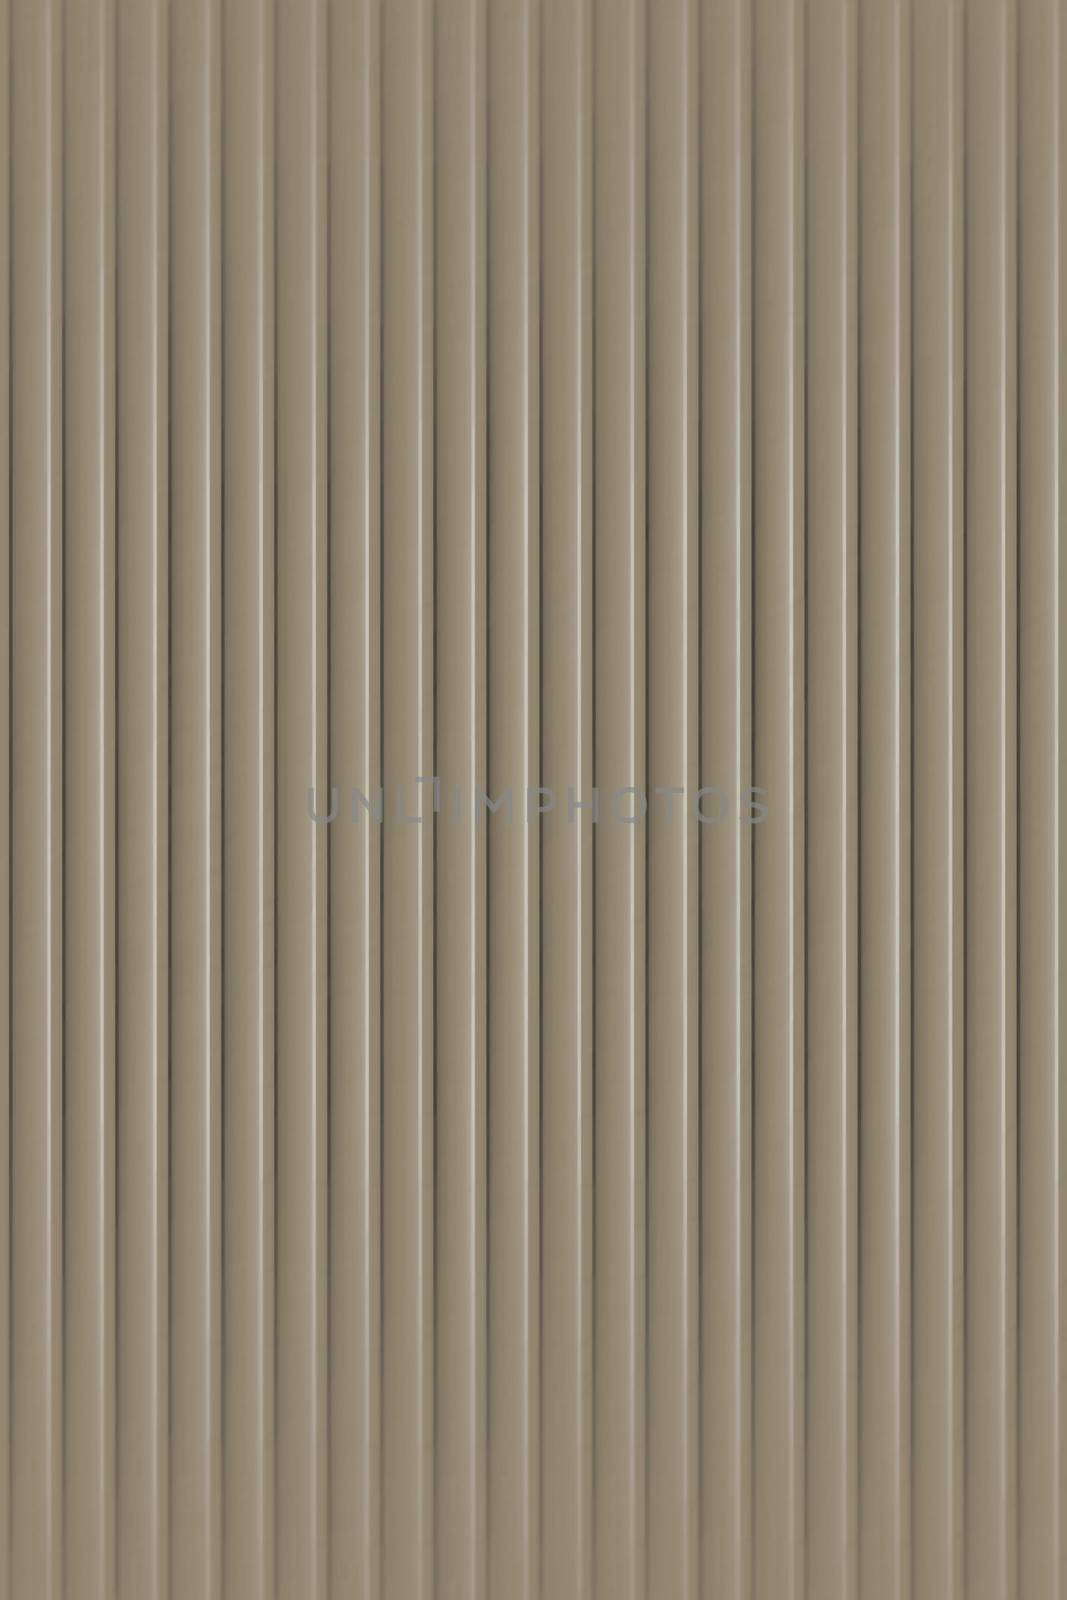 Abstract soft stripes pattern background, pinstripe line design element, graphic art vertical lines, vintage texture, grunge cardboard stripes